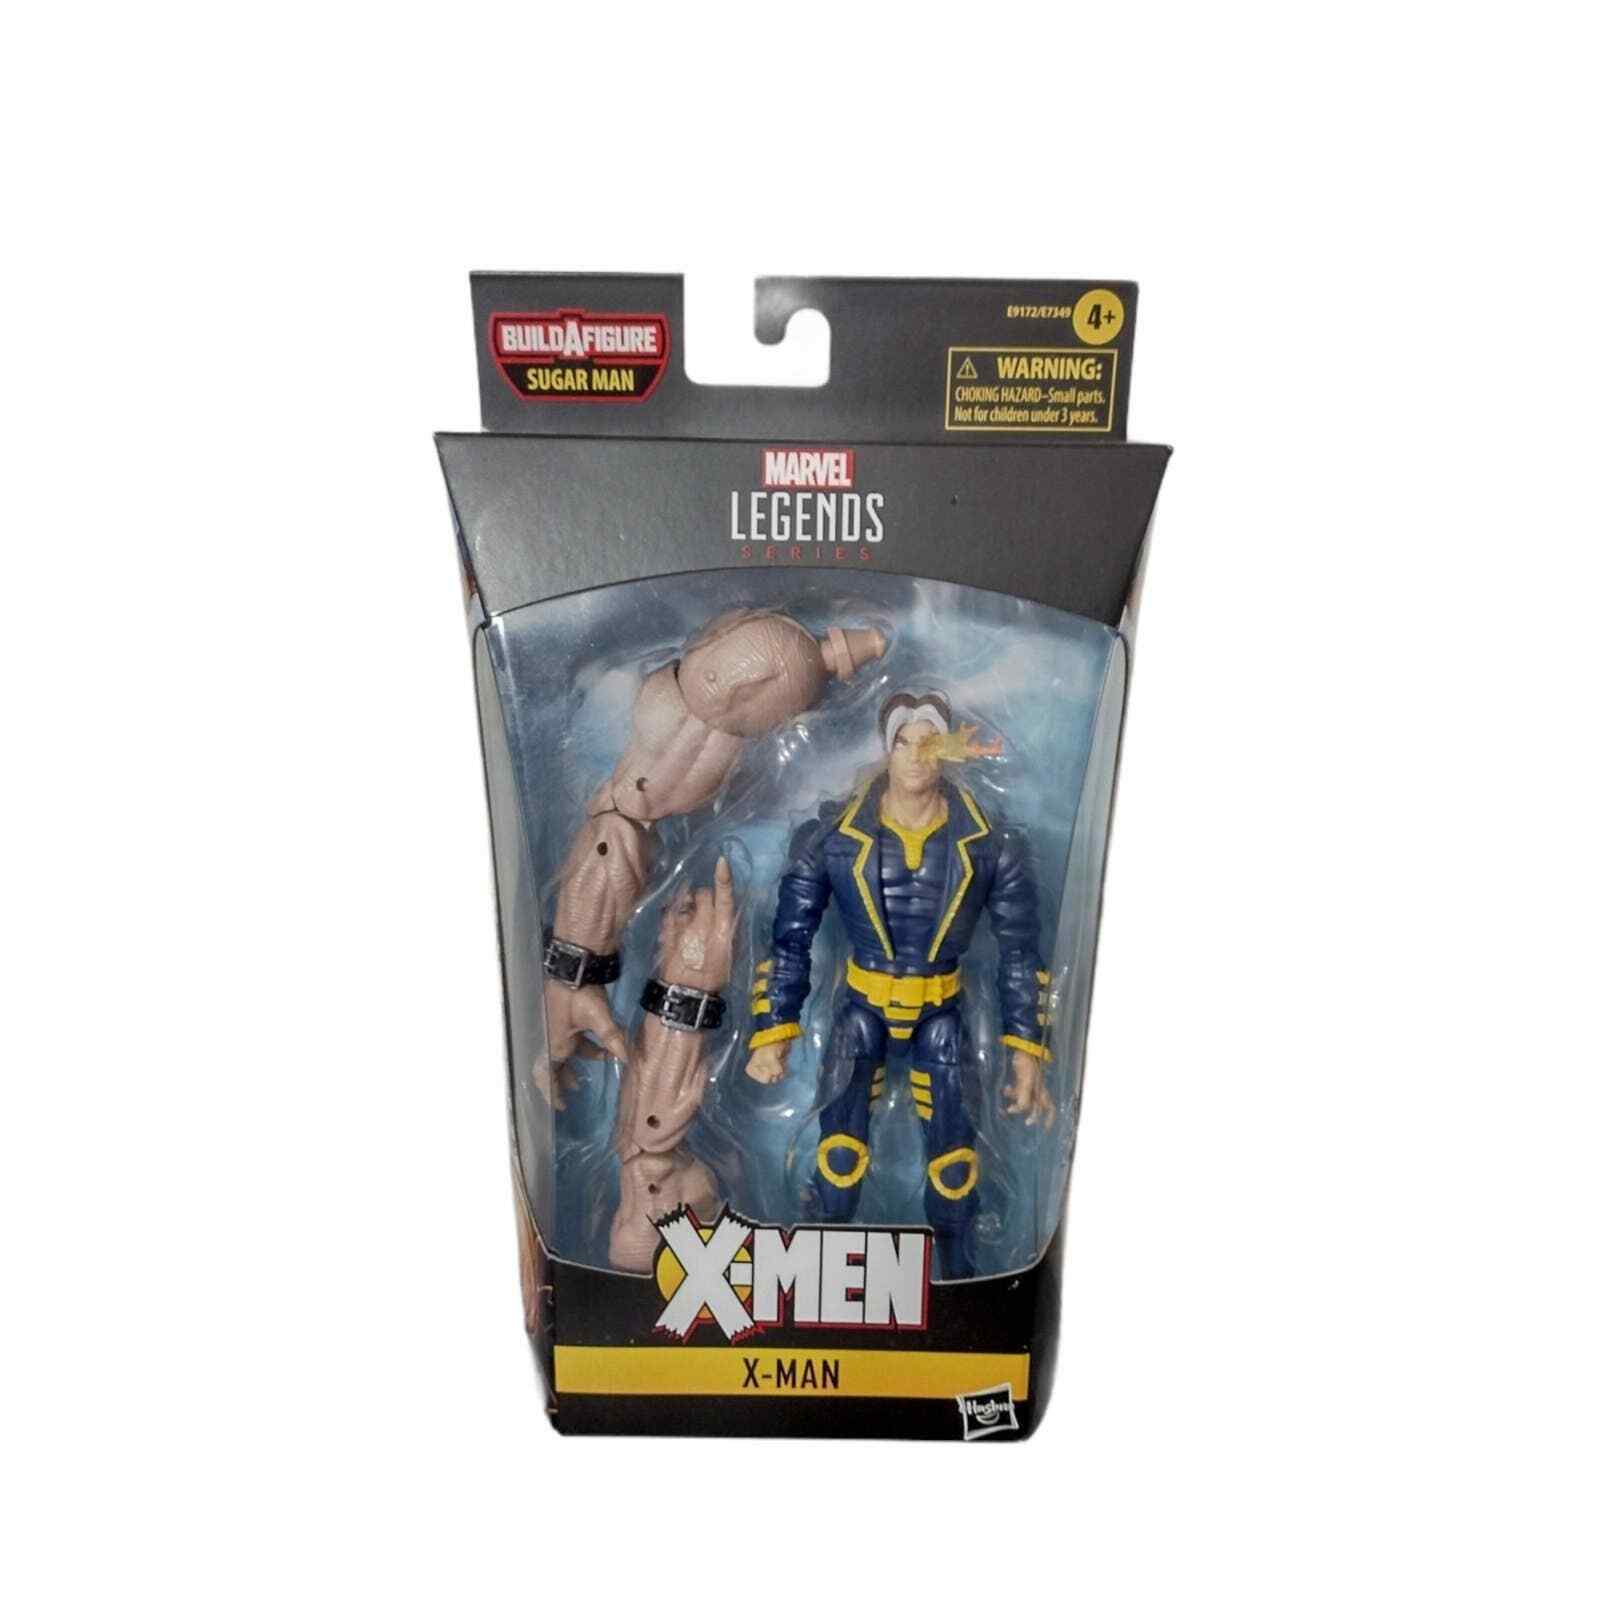 Hasbro's X-Men Marvel Legends 6" Nathaniel Nate Grey X-man Sugarman BAF